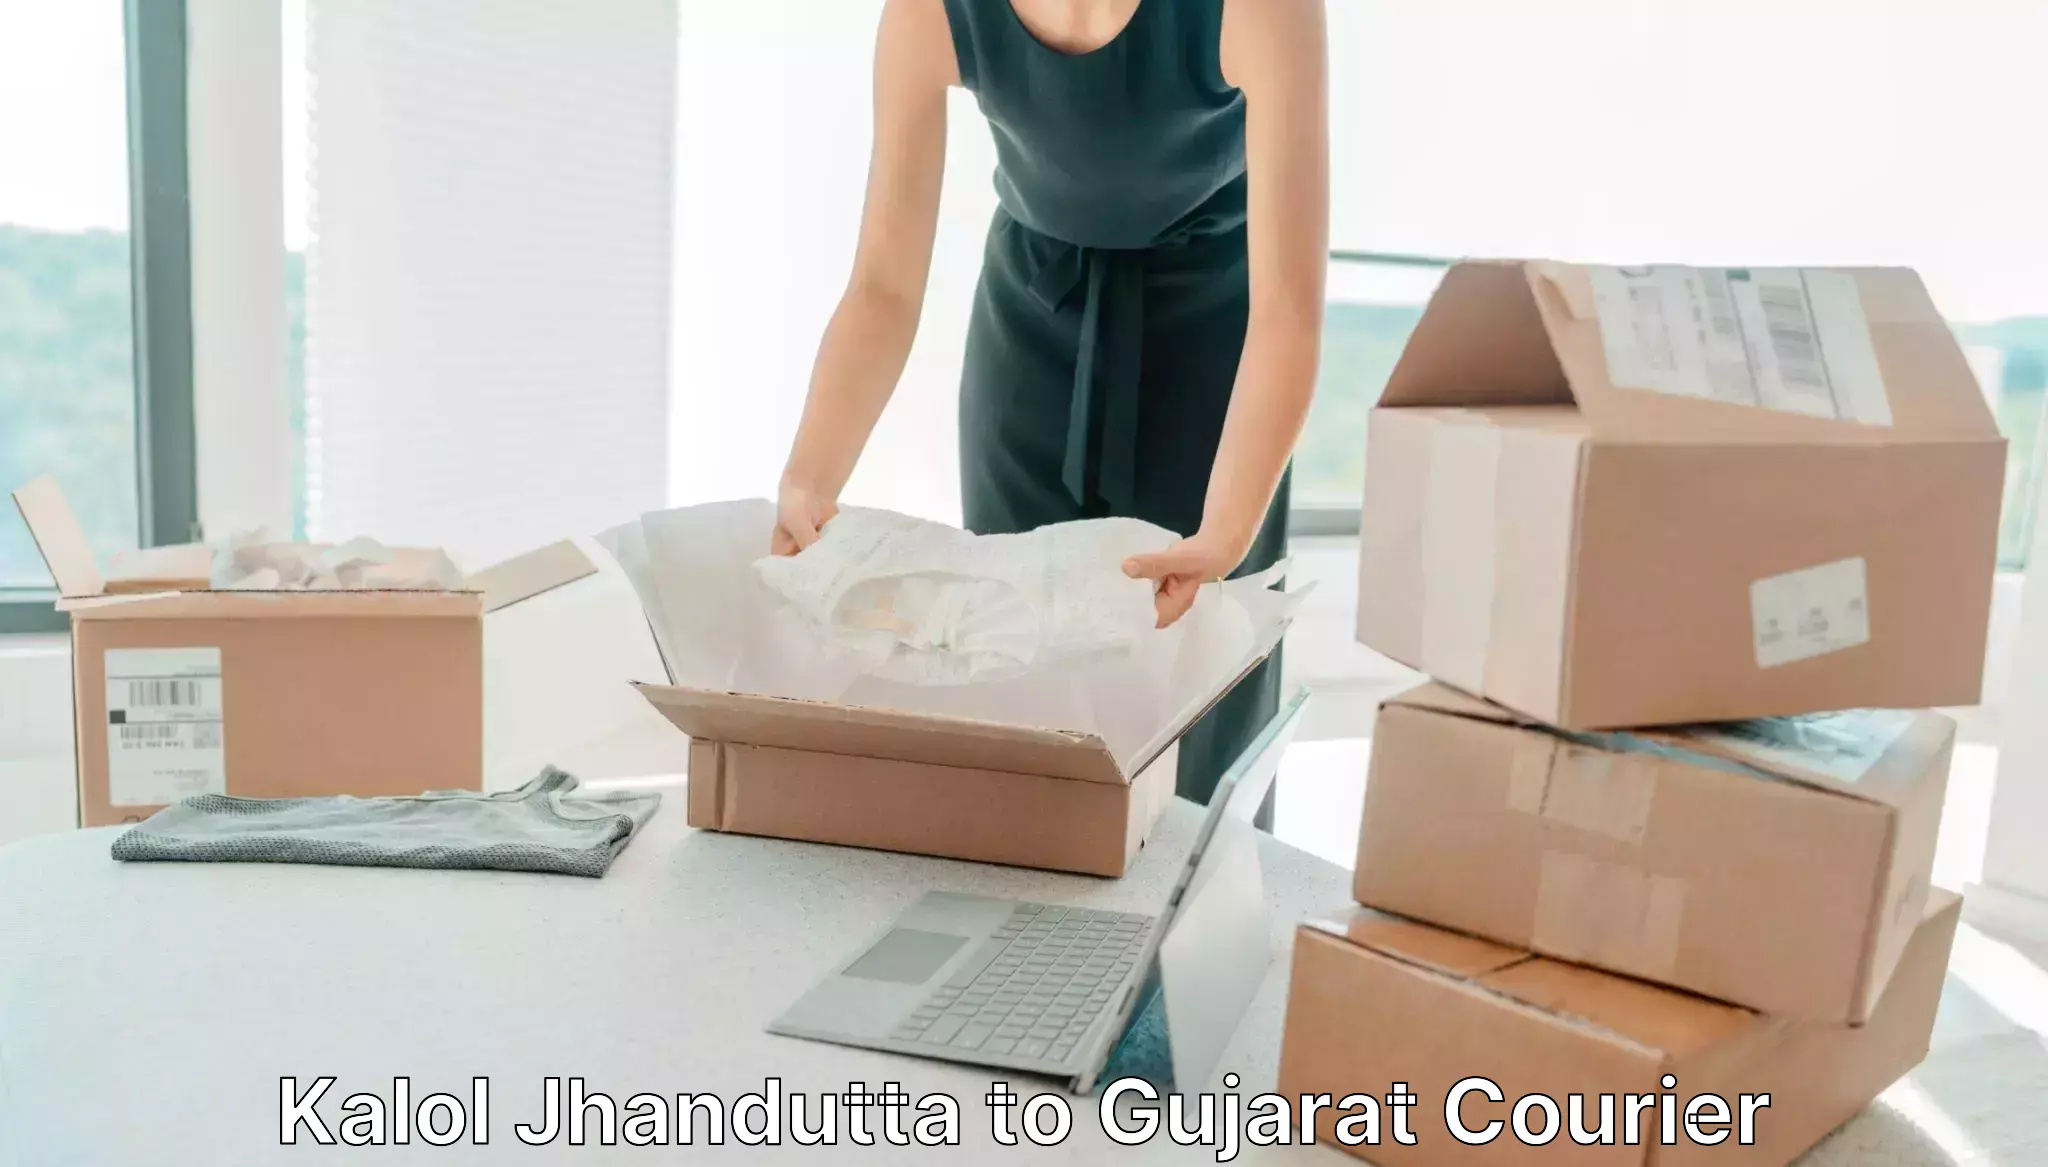 Reliable courier service Kalol Jhandutta to Jasdan